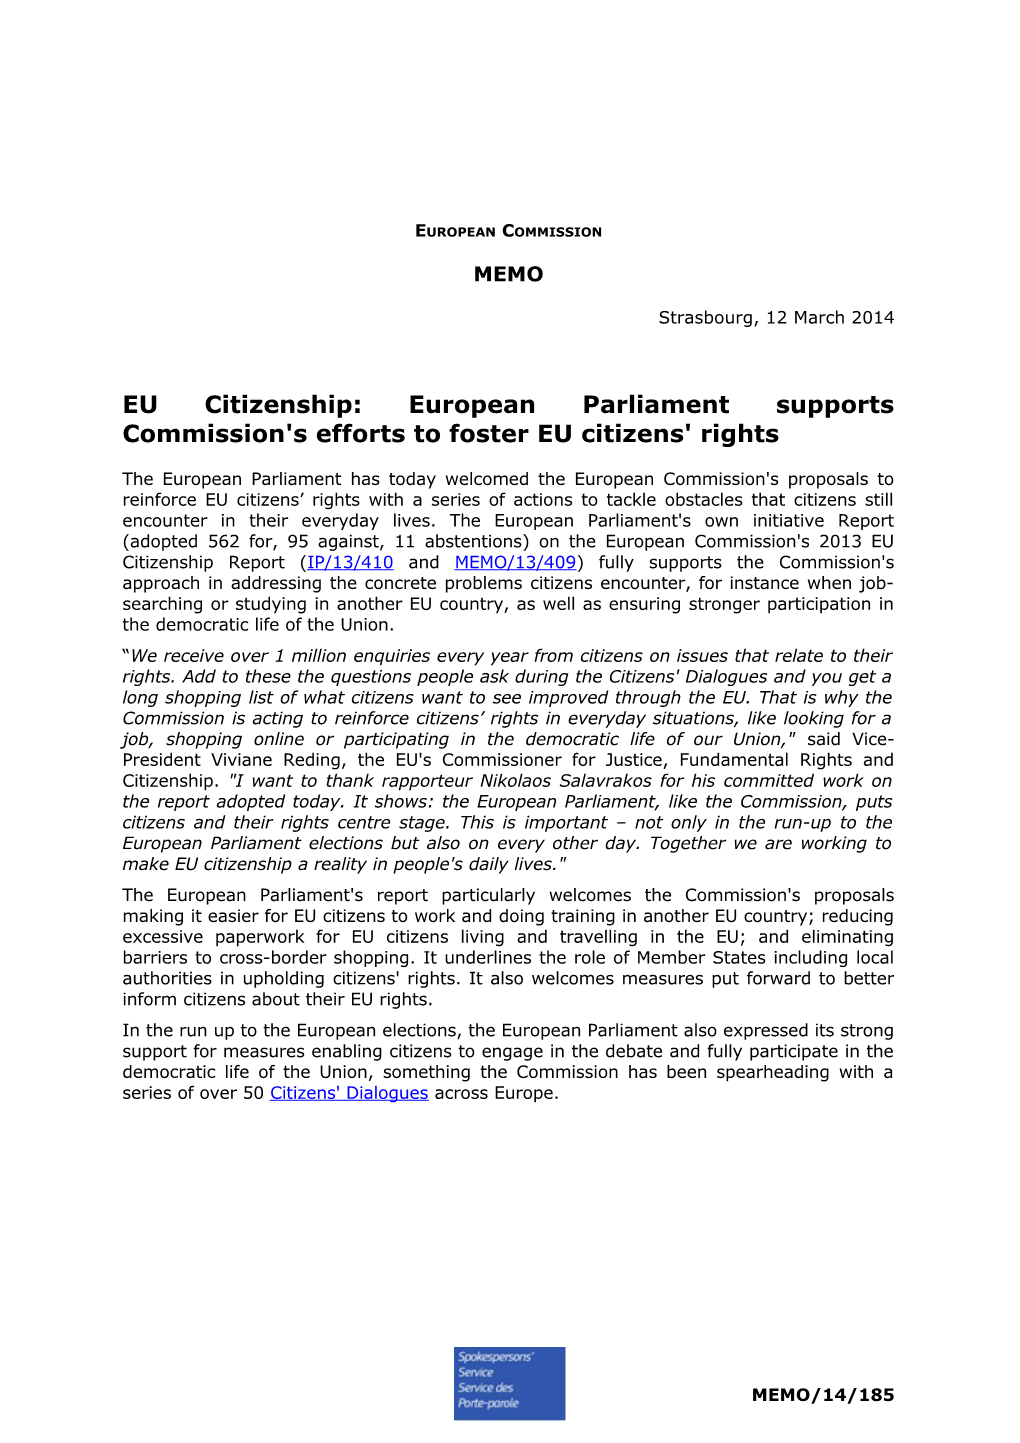 EU Citizenship: European Parliament Supports Commission's Efforts to Foster EU Citizens'